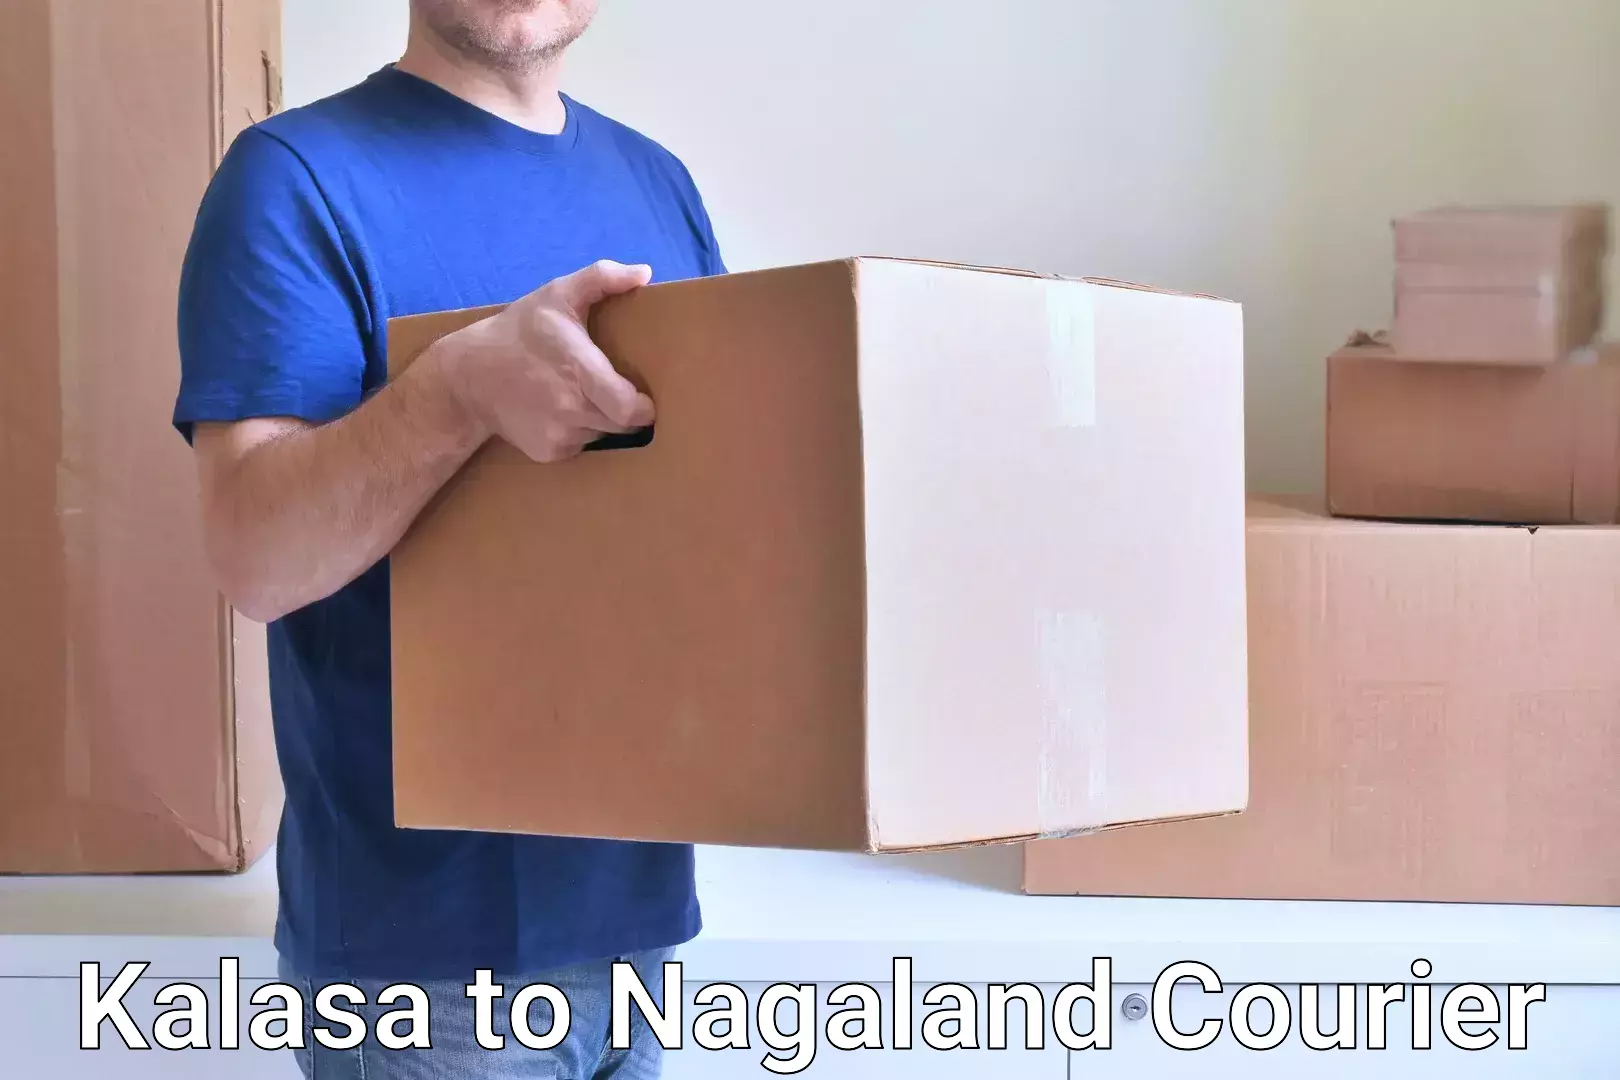 Modern courier technology Kalasa to Nagaland